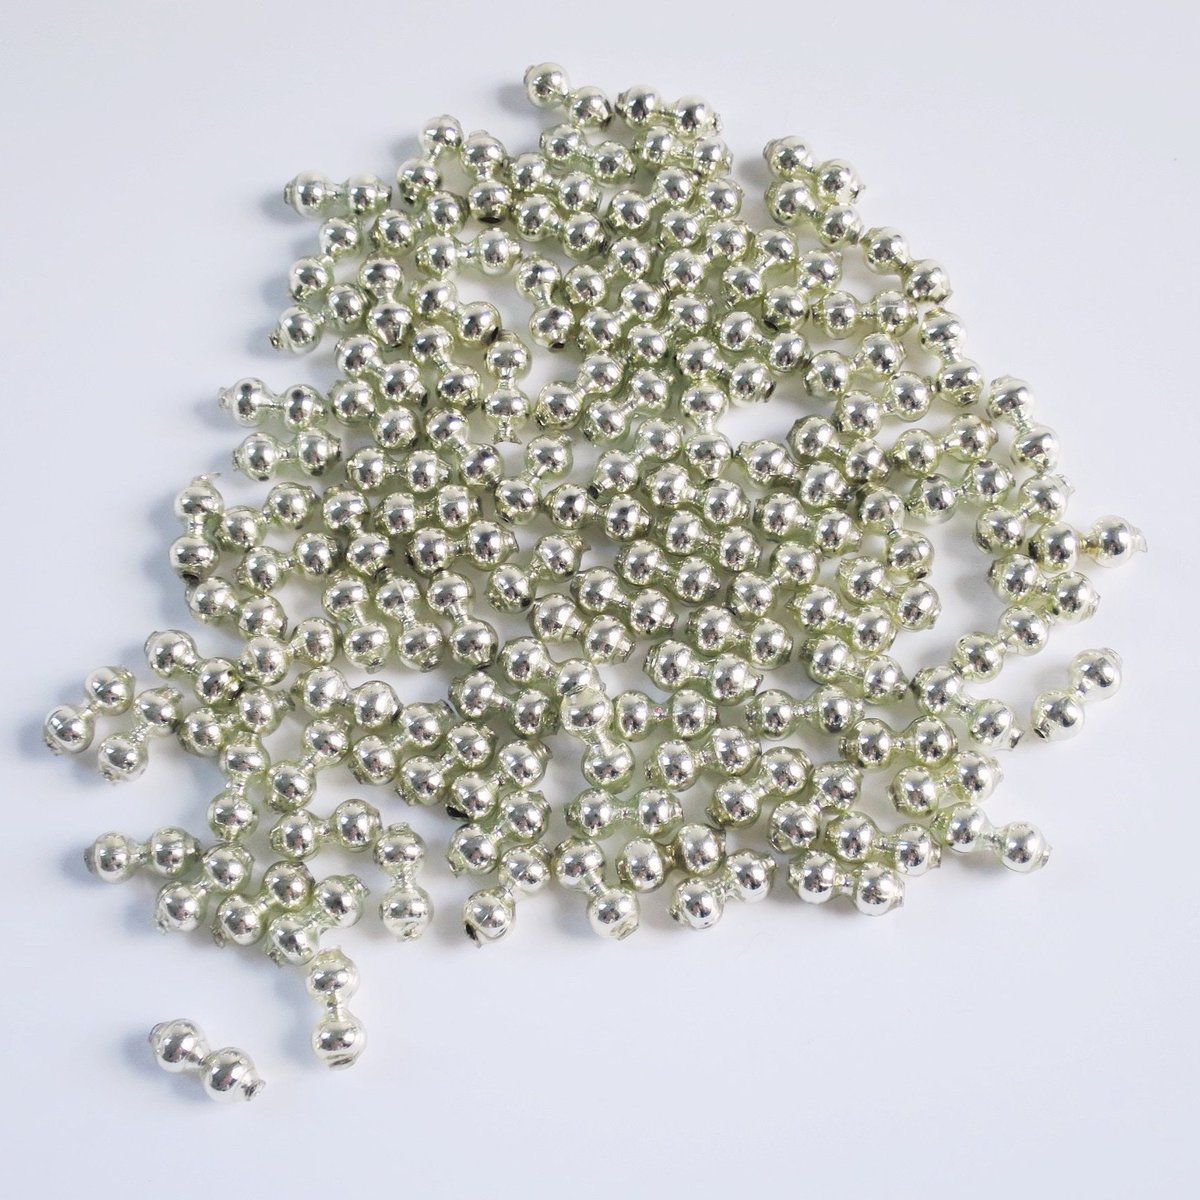 Lot of 50+ Silver Mercury Glass Beads, 1/2' Double Glass Beads, Glass Garland Supplies, Dollhouse Christmas tuppu.net/68f49378  #HolidayCraftSupply